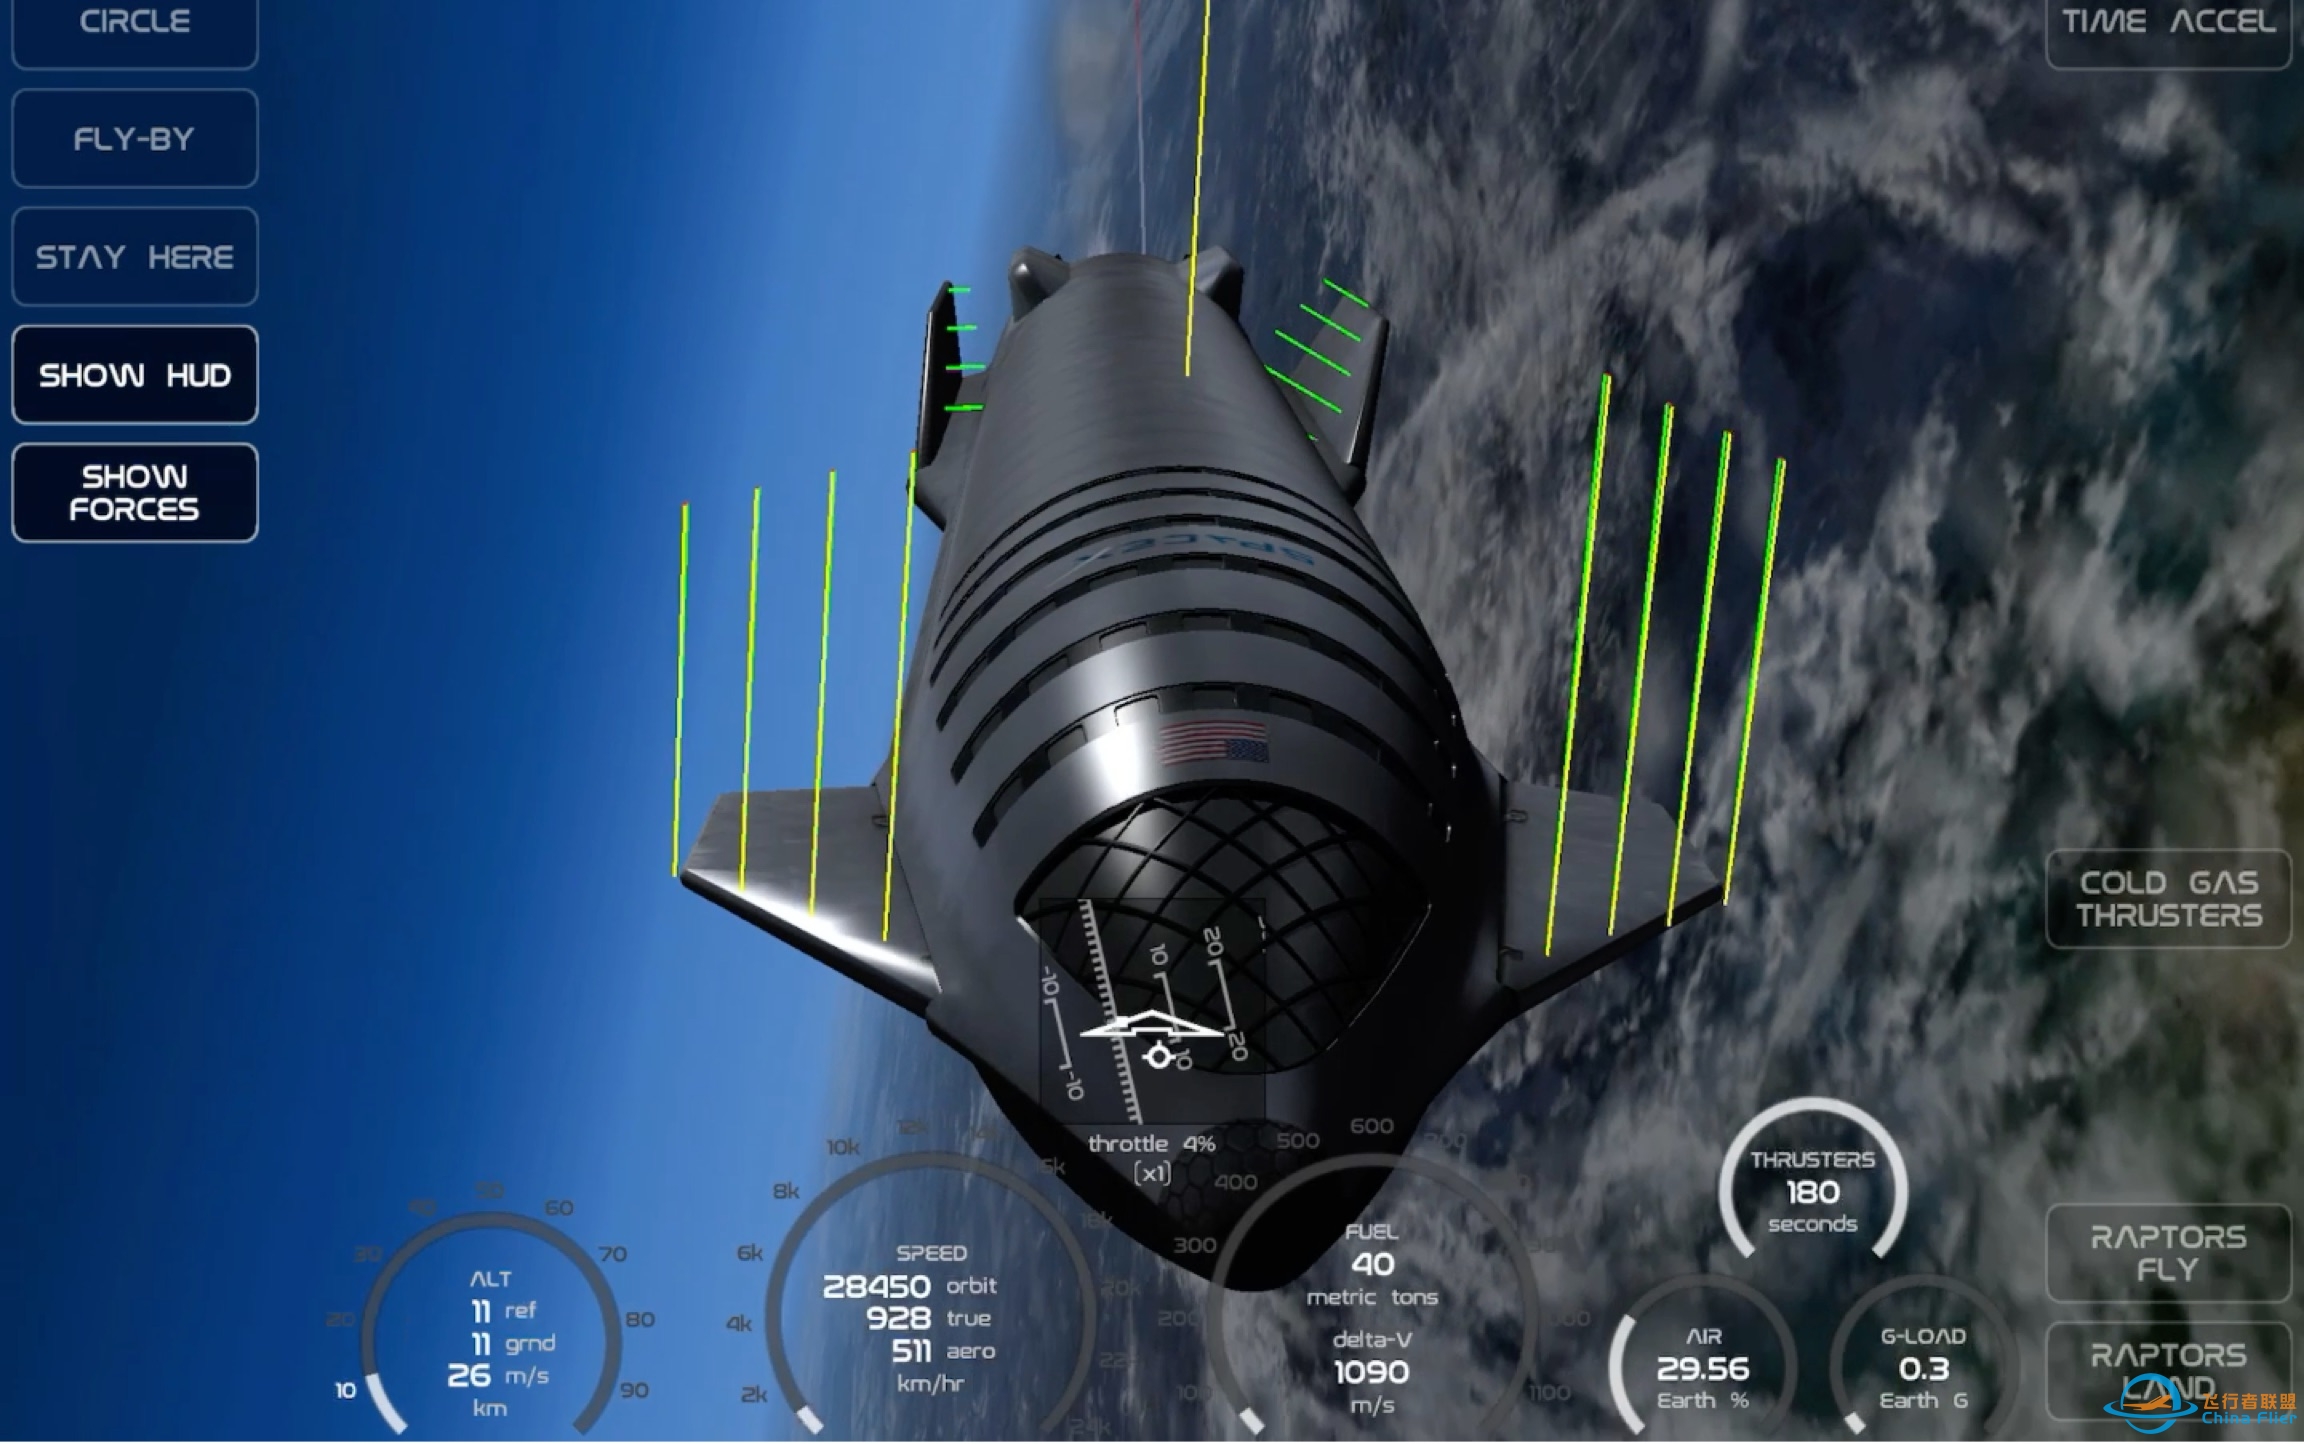 [SpaceX]用X-Plane: Starship模拟星舰高空飞行测试-3960 